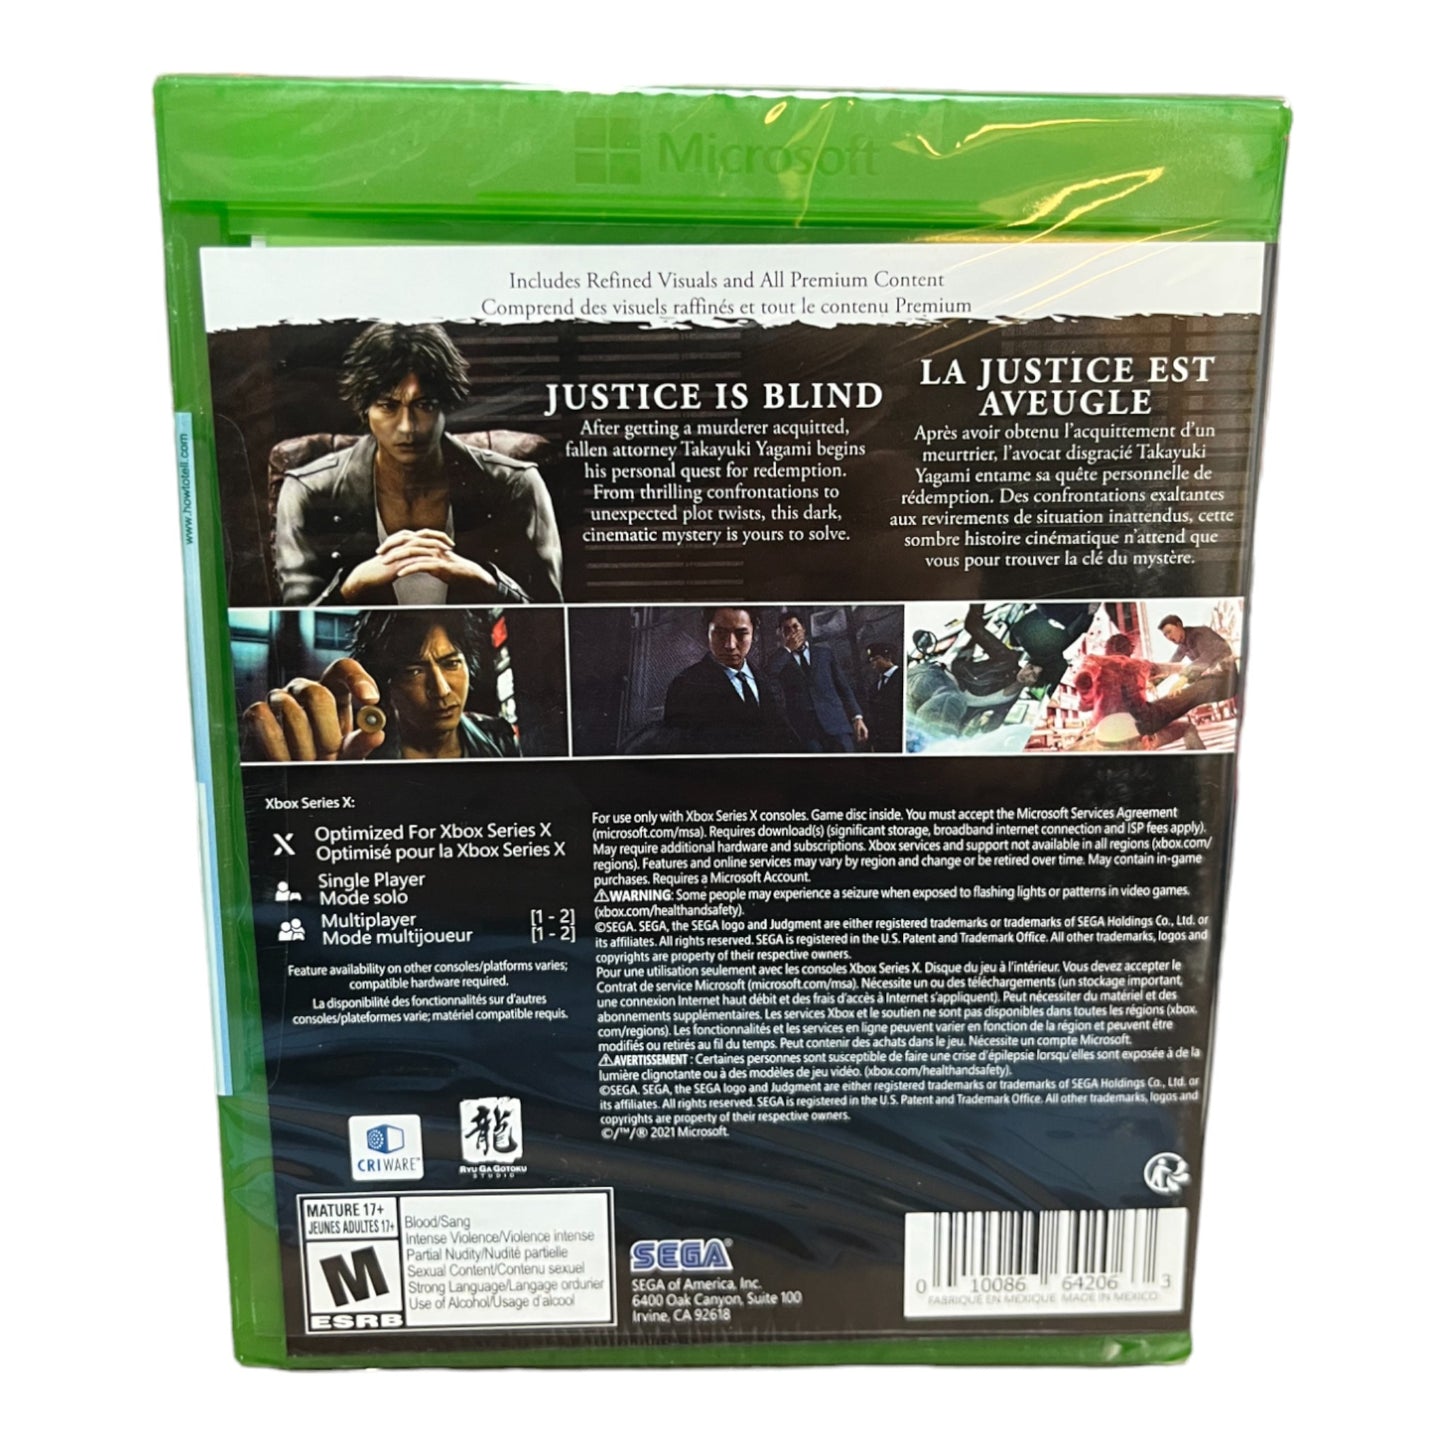 Judgment (Xbox Series X) - Sealed